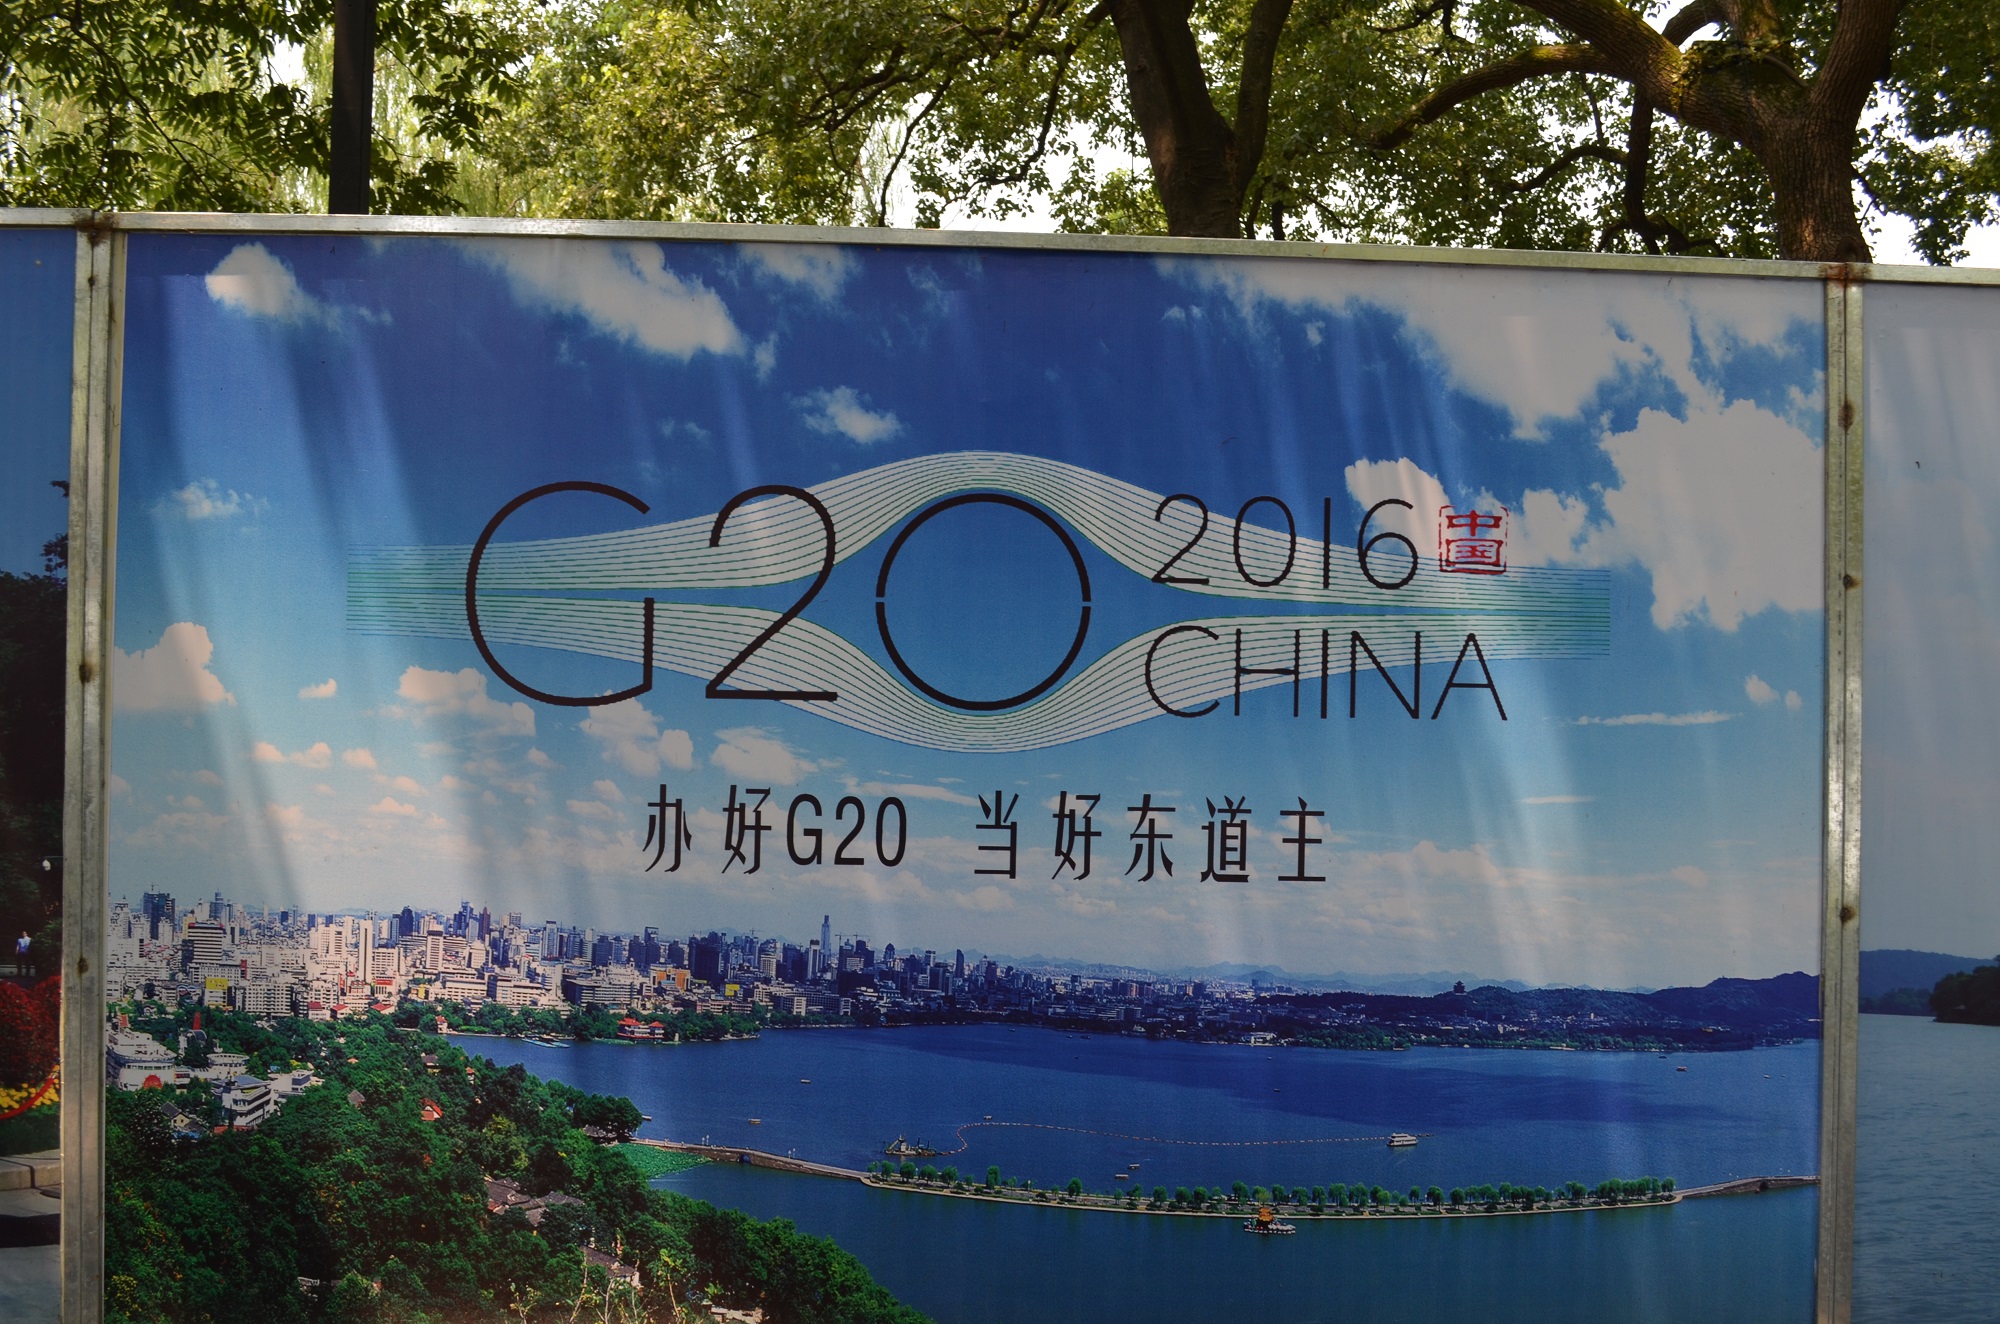 G20 Werbung an einem Bauzaun.